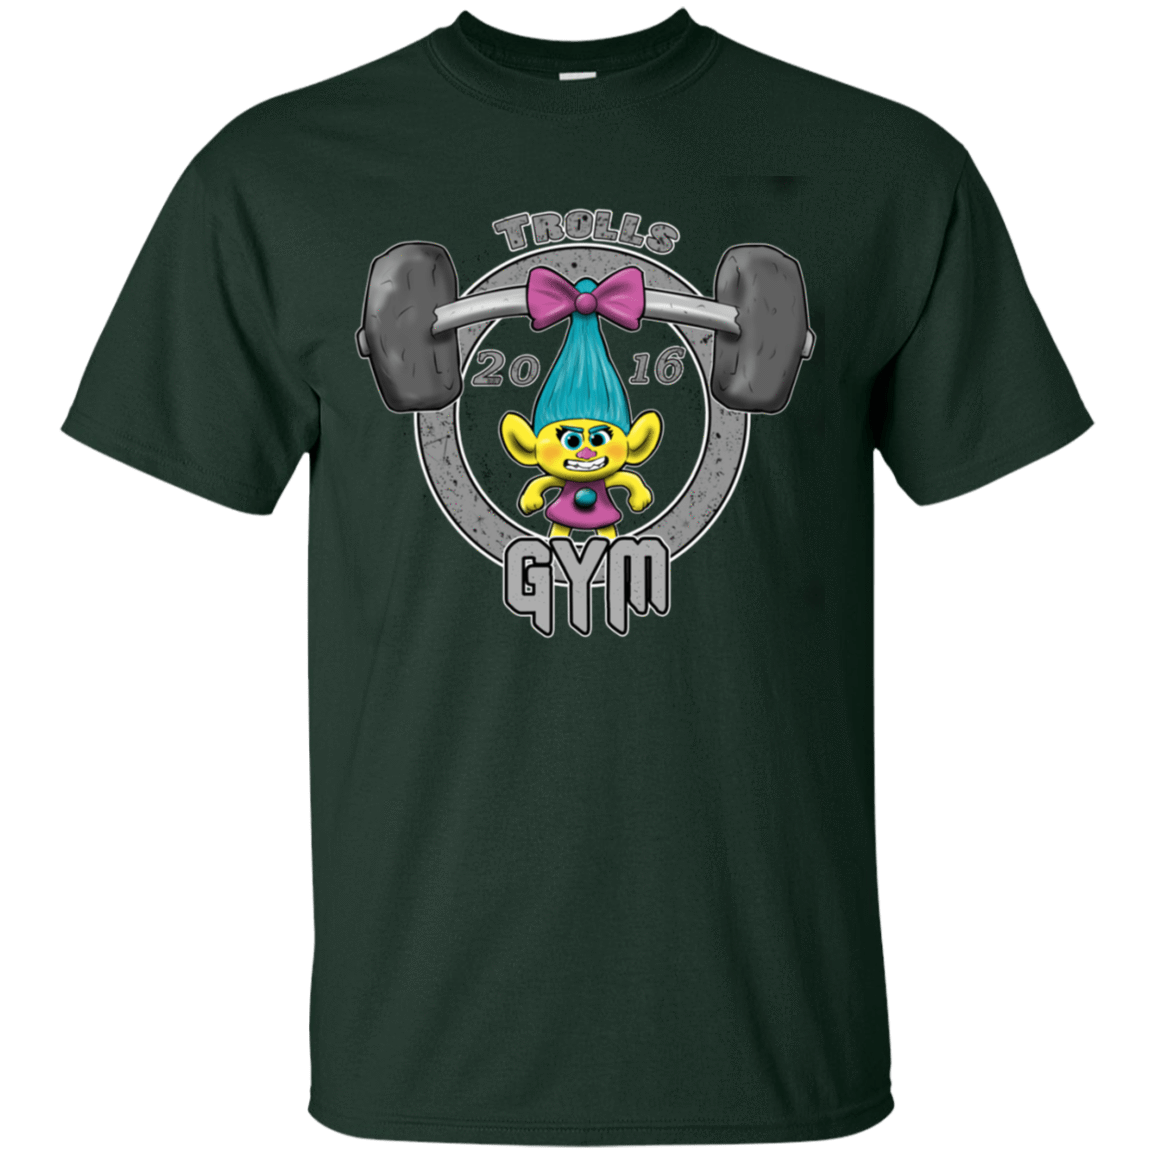 T-Shirts Forest / S Trolls Gym T-Shirt